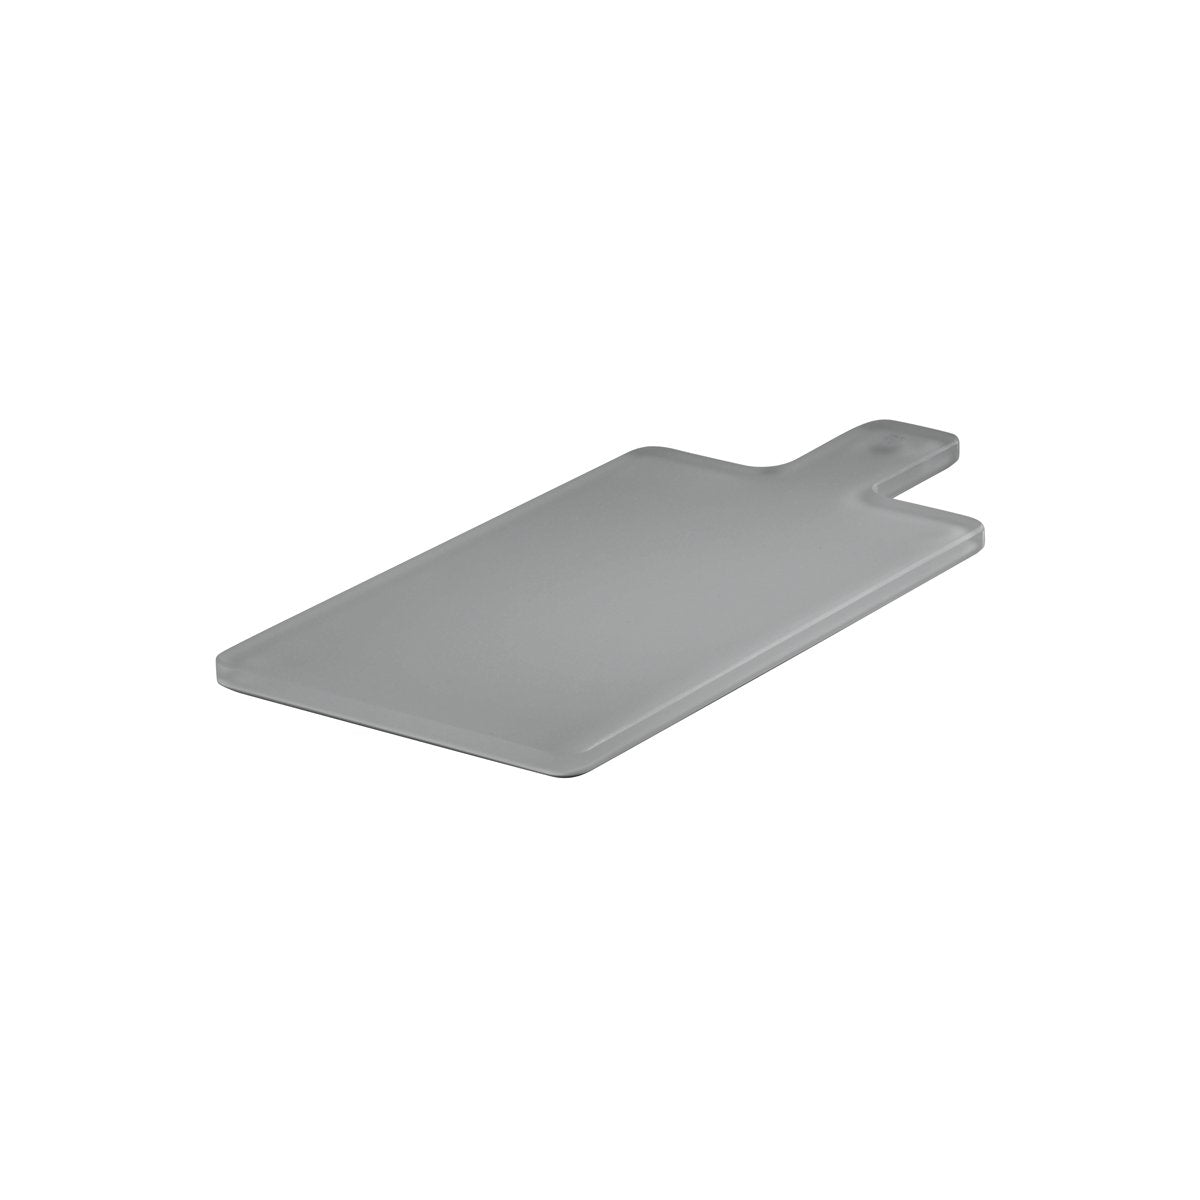 MLP115505 Mealplak Tapas Paddle Board Concrete 320x140x10mm Tomkin Australia Hospitality Supplies